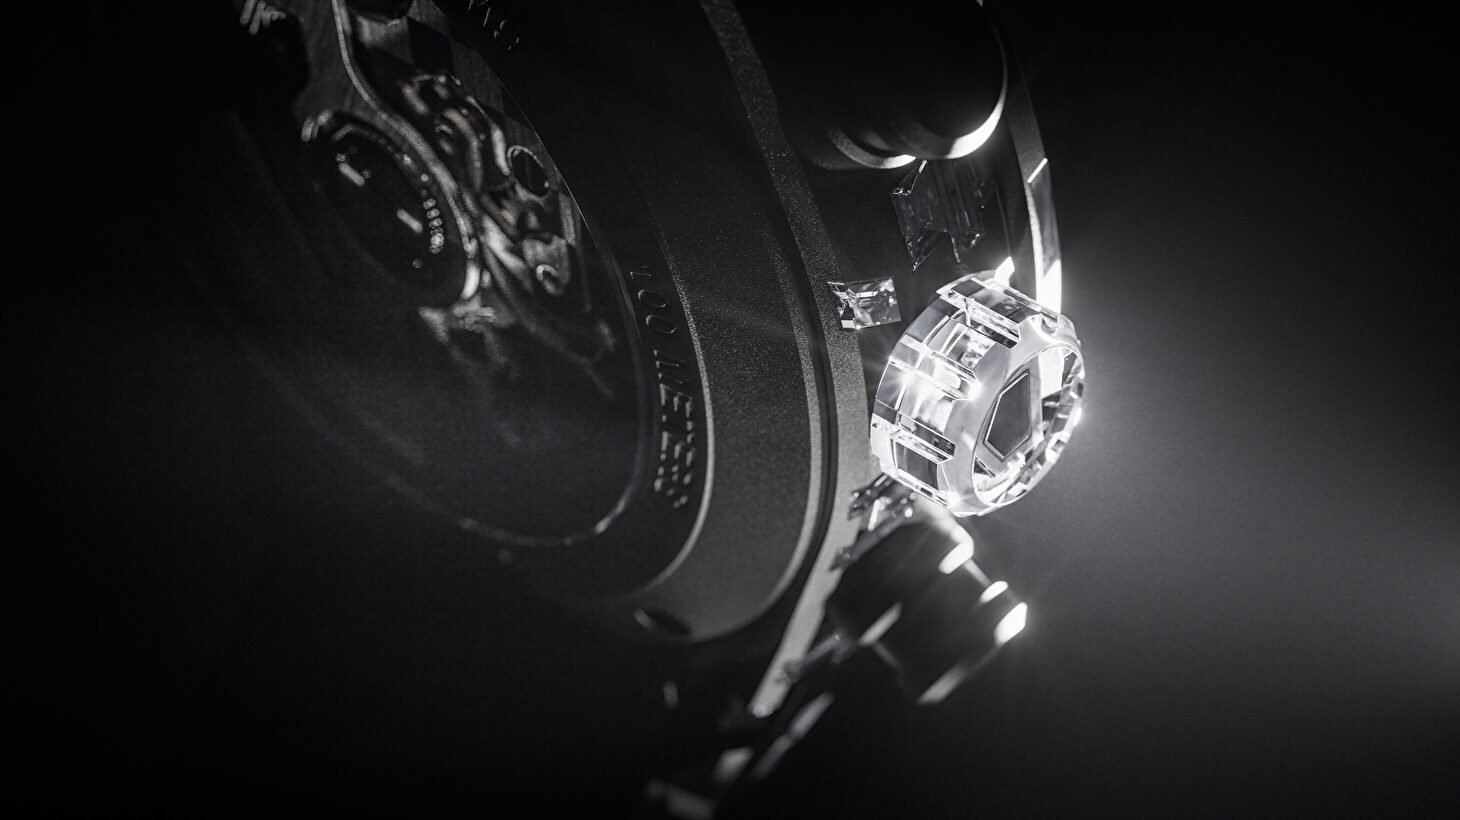 TAG Heuer Carrera Plasma Diamant d'Avant-Garde Chronograph Tourbillon 44 мм